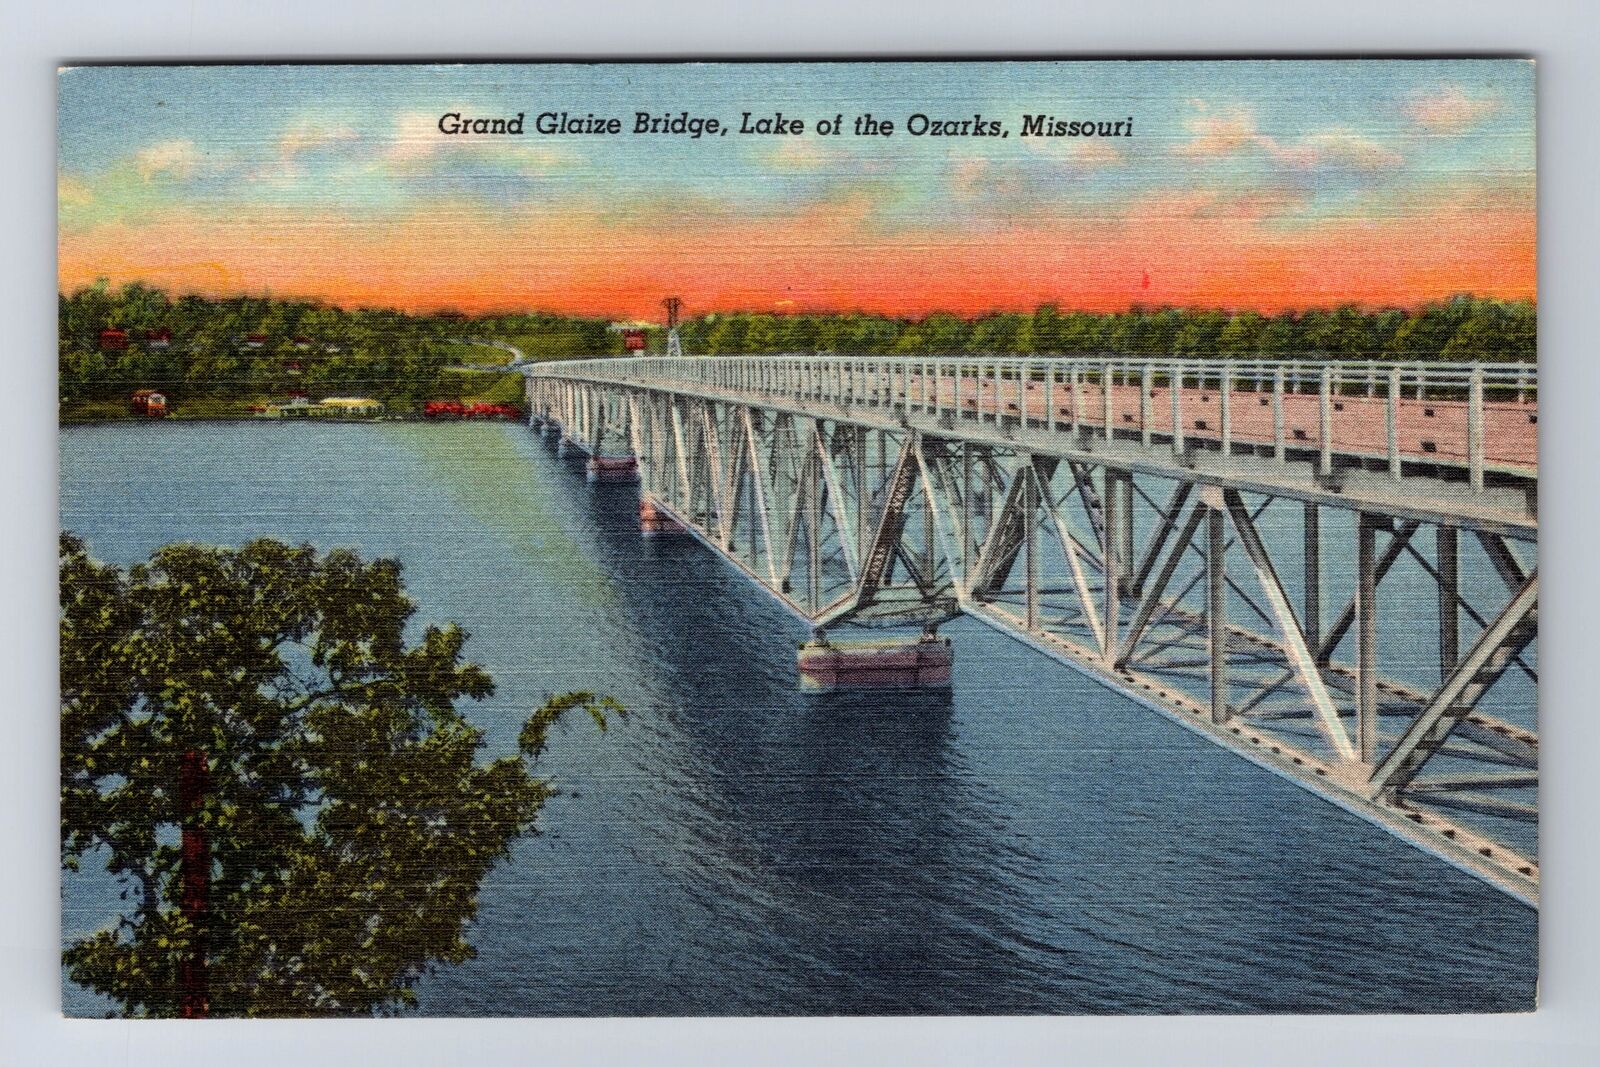 Ozarks MO-Missouri, Grand Glaize Bridge, Grand Glaize River, Vintage Postcard